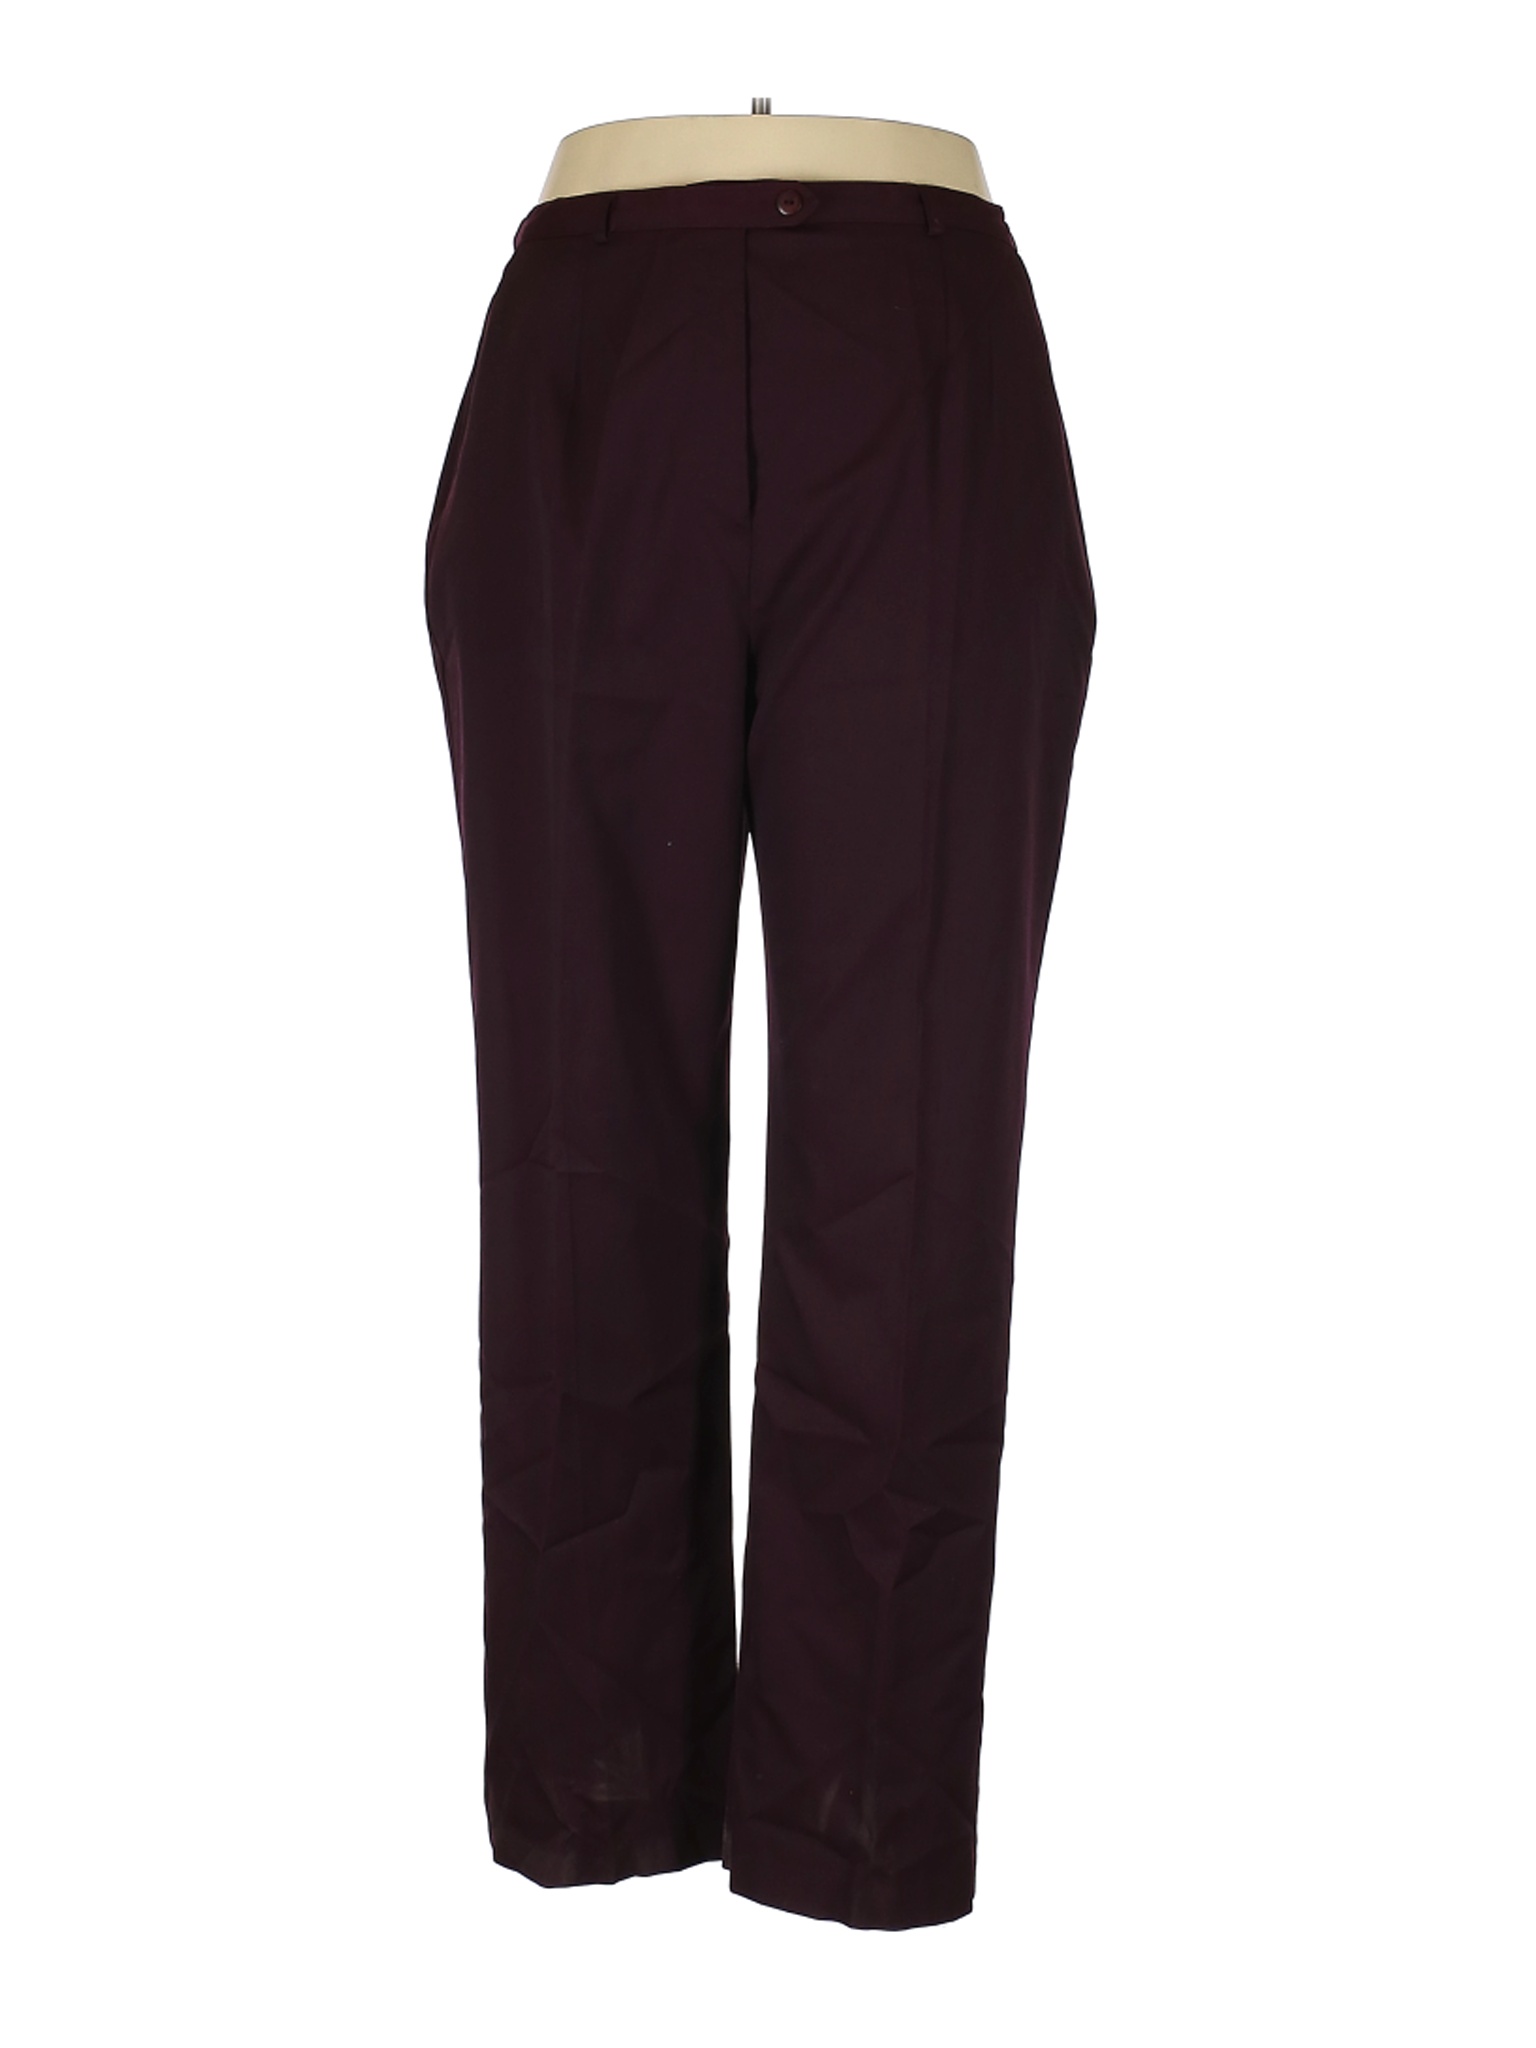 Sag Harbor Women Brown Dress Pants 18 Plus | eBay